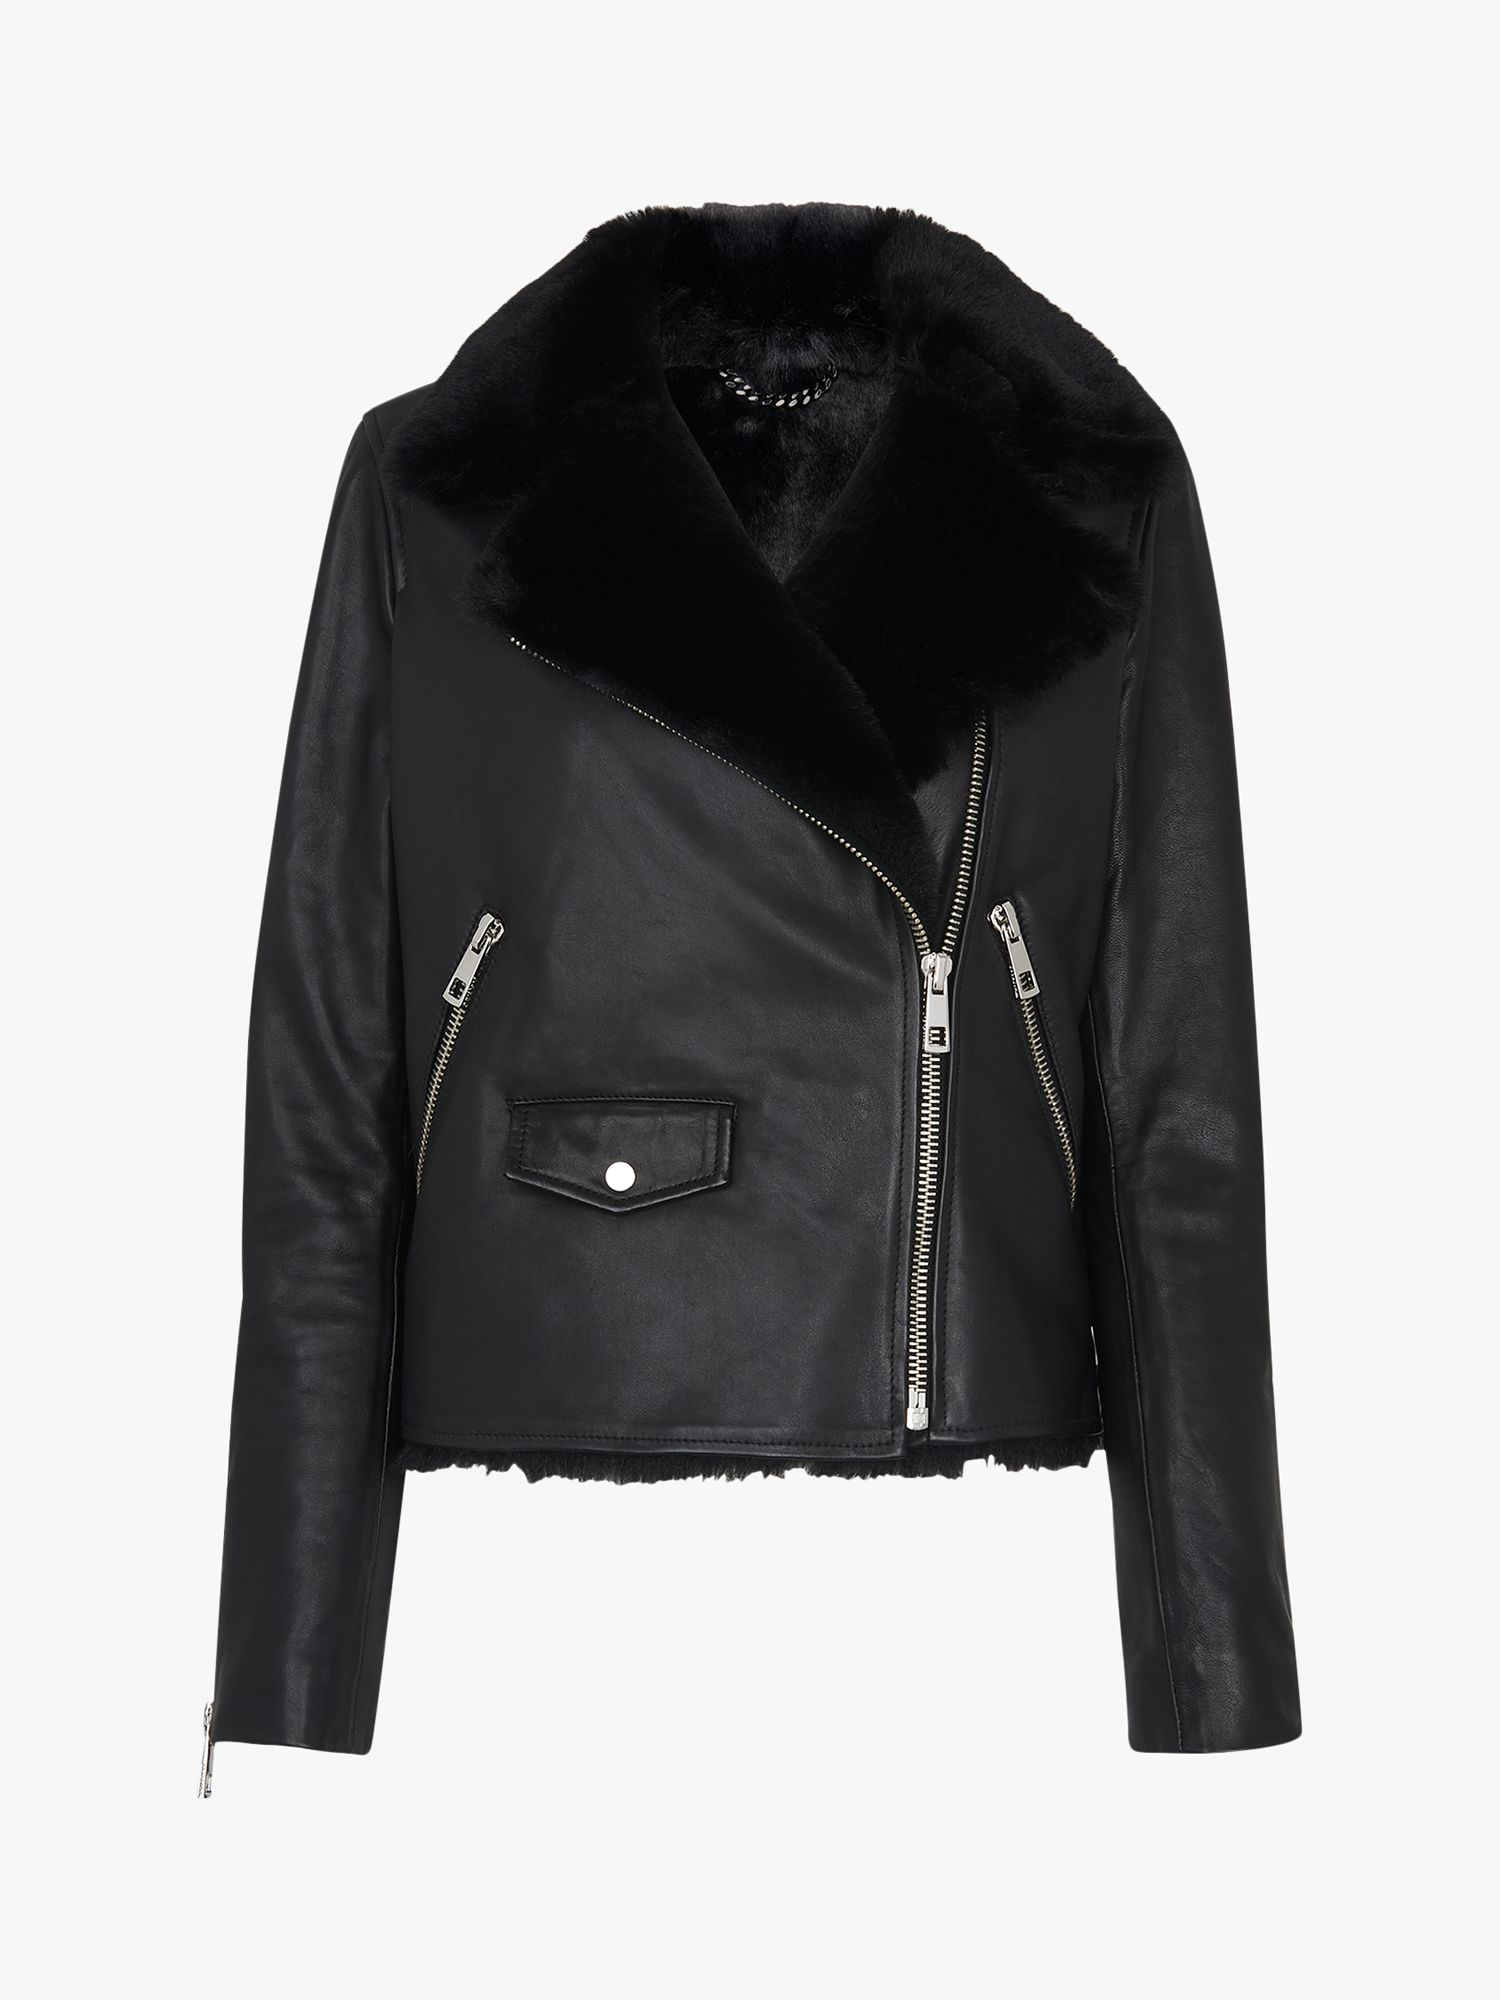 Whistles Agnes Faux Fur Trim Leather Jacket, Black at John Lewis & Partners